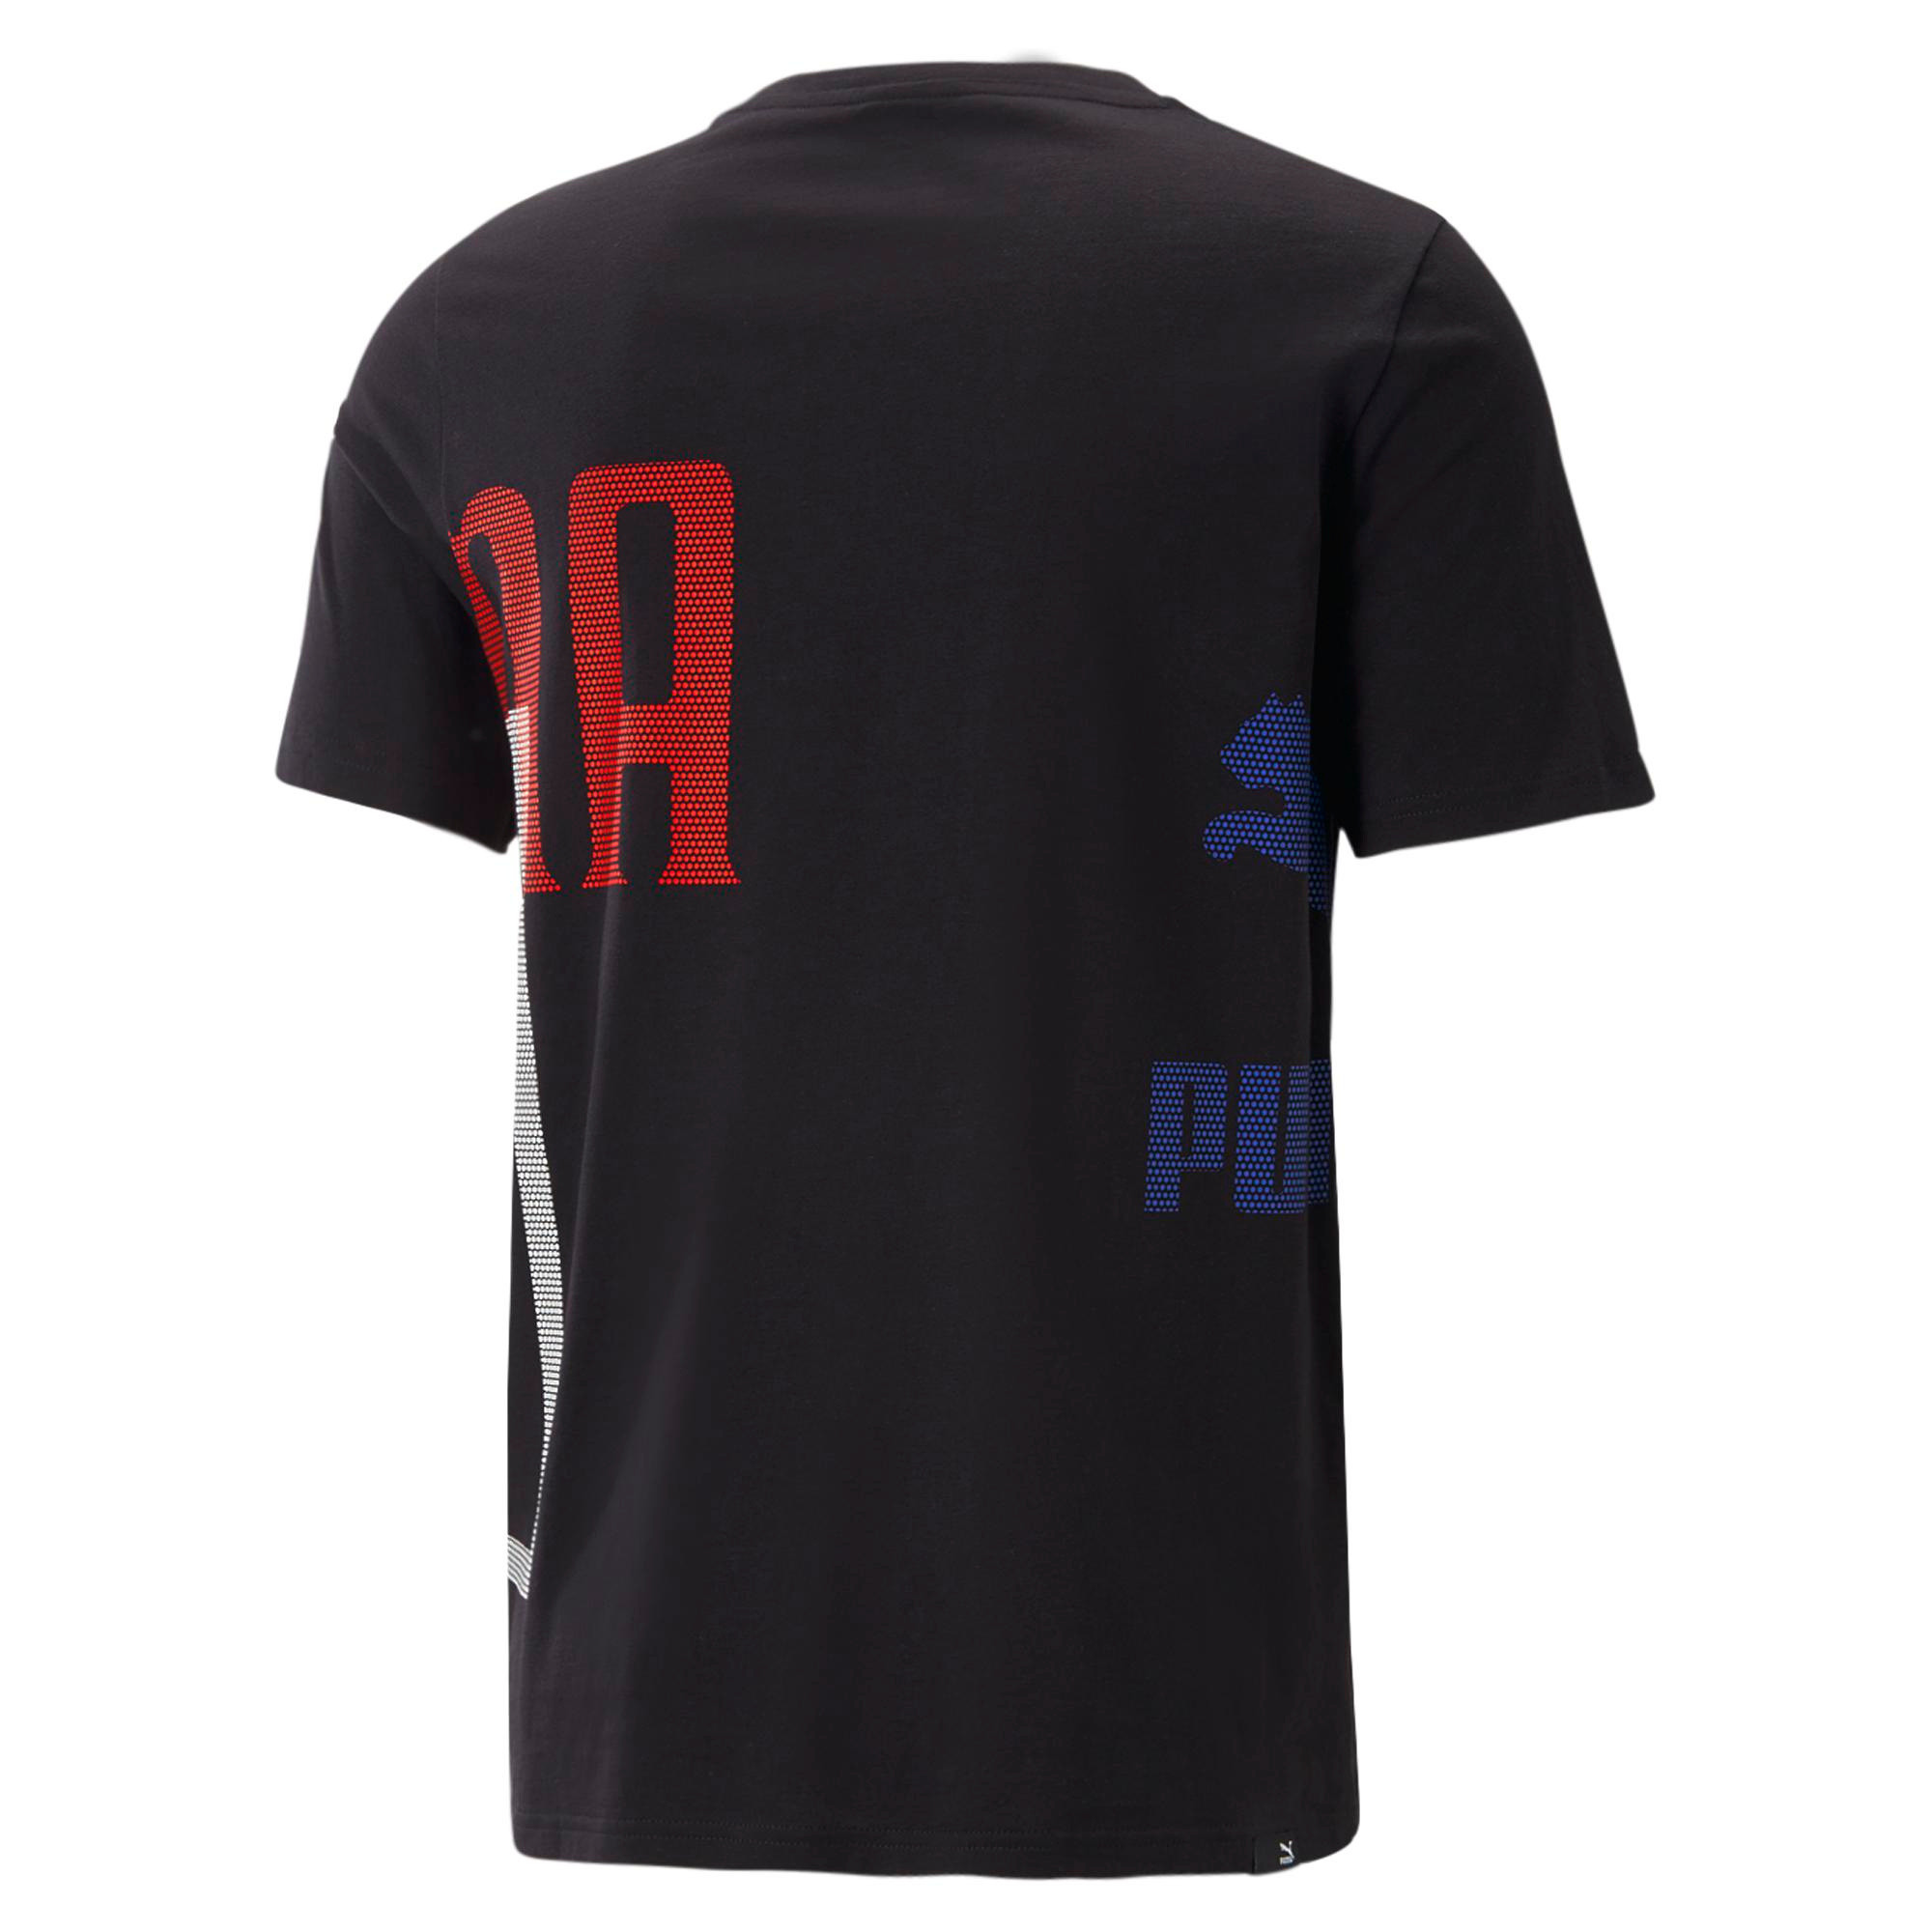 Puma - Cotton T-shirt with logo, Black, large image number 1